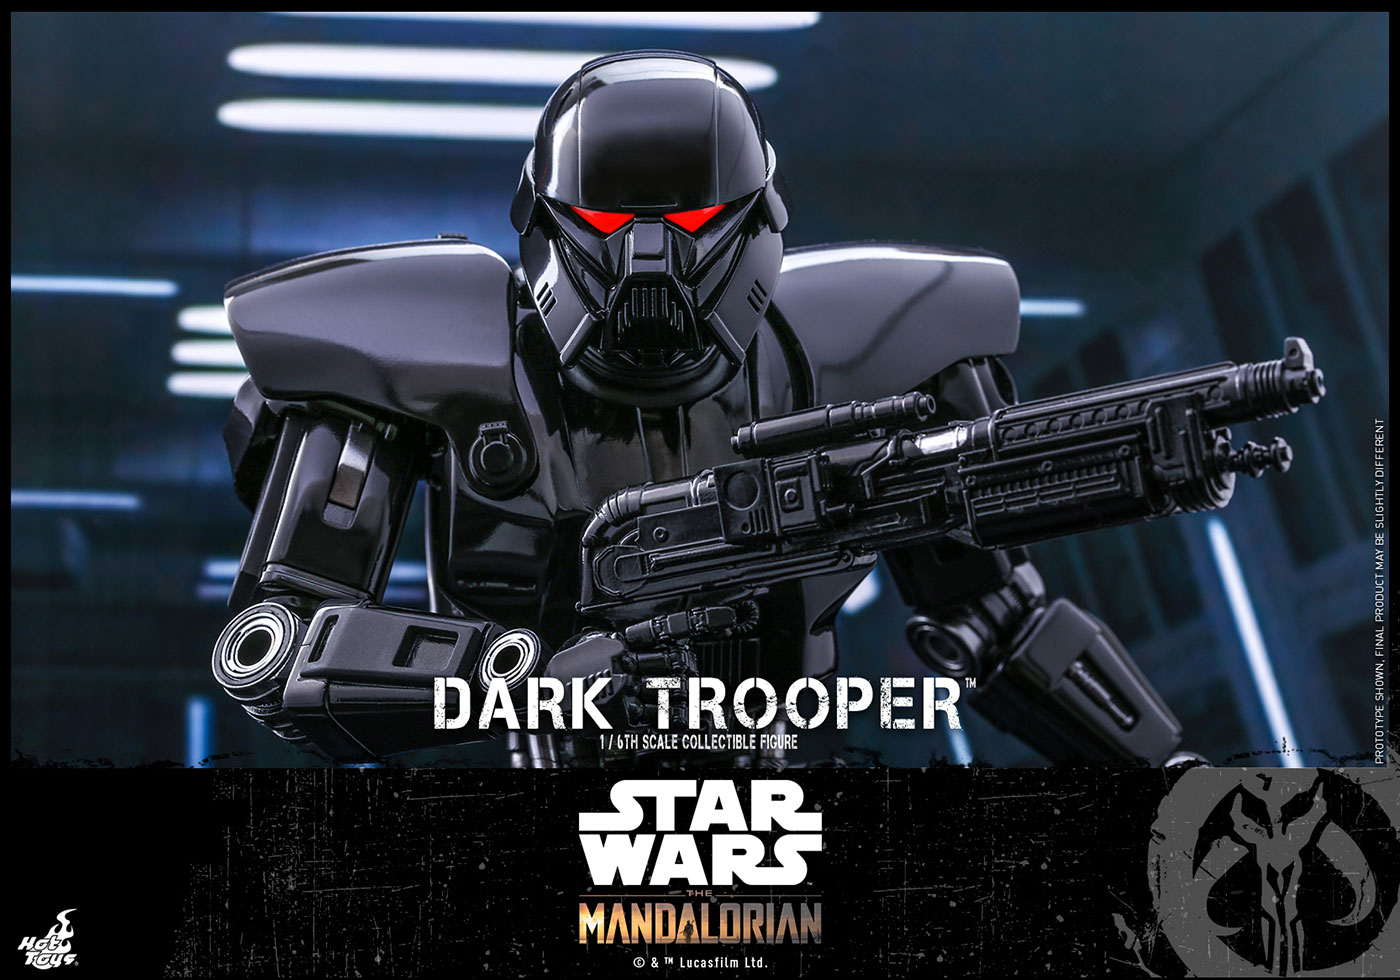 Star Wars - The Mandalorian: Dark Trooper, 1/6 Figur ... https://spaceart.de/produkte/sw068-dark-trooper-figur-hot-toys-tms032-star-wars-the-mandalorian-907625-4895228607355-spaceart.php